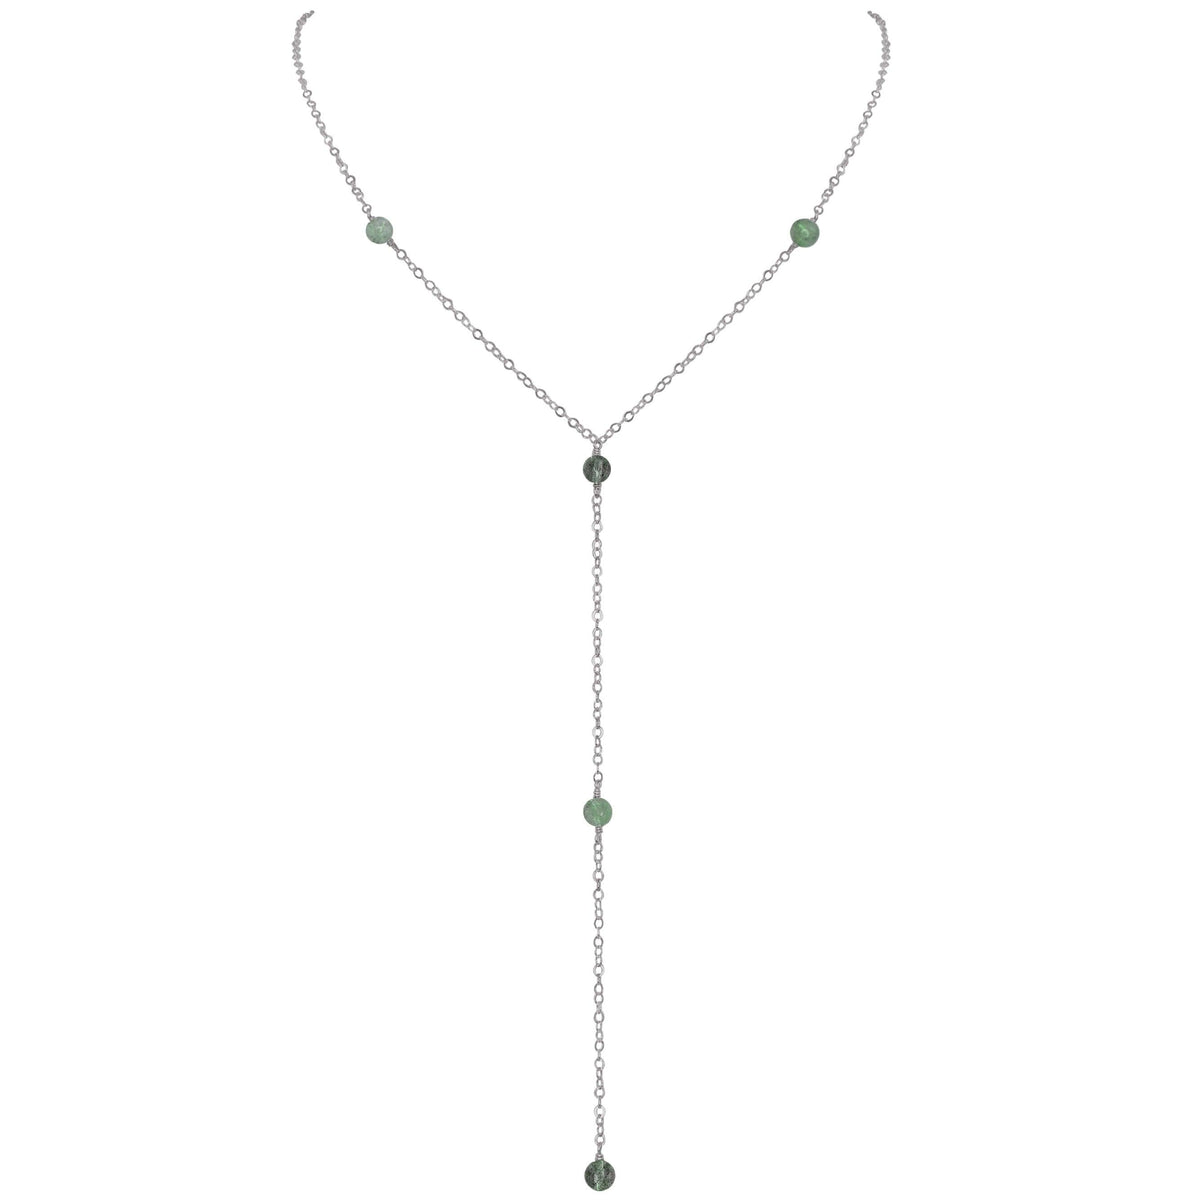 Dainty Y Necklace - Labradorite - Stainless Steel - Luna Tide Handmade Jewellery